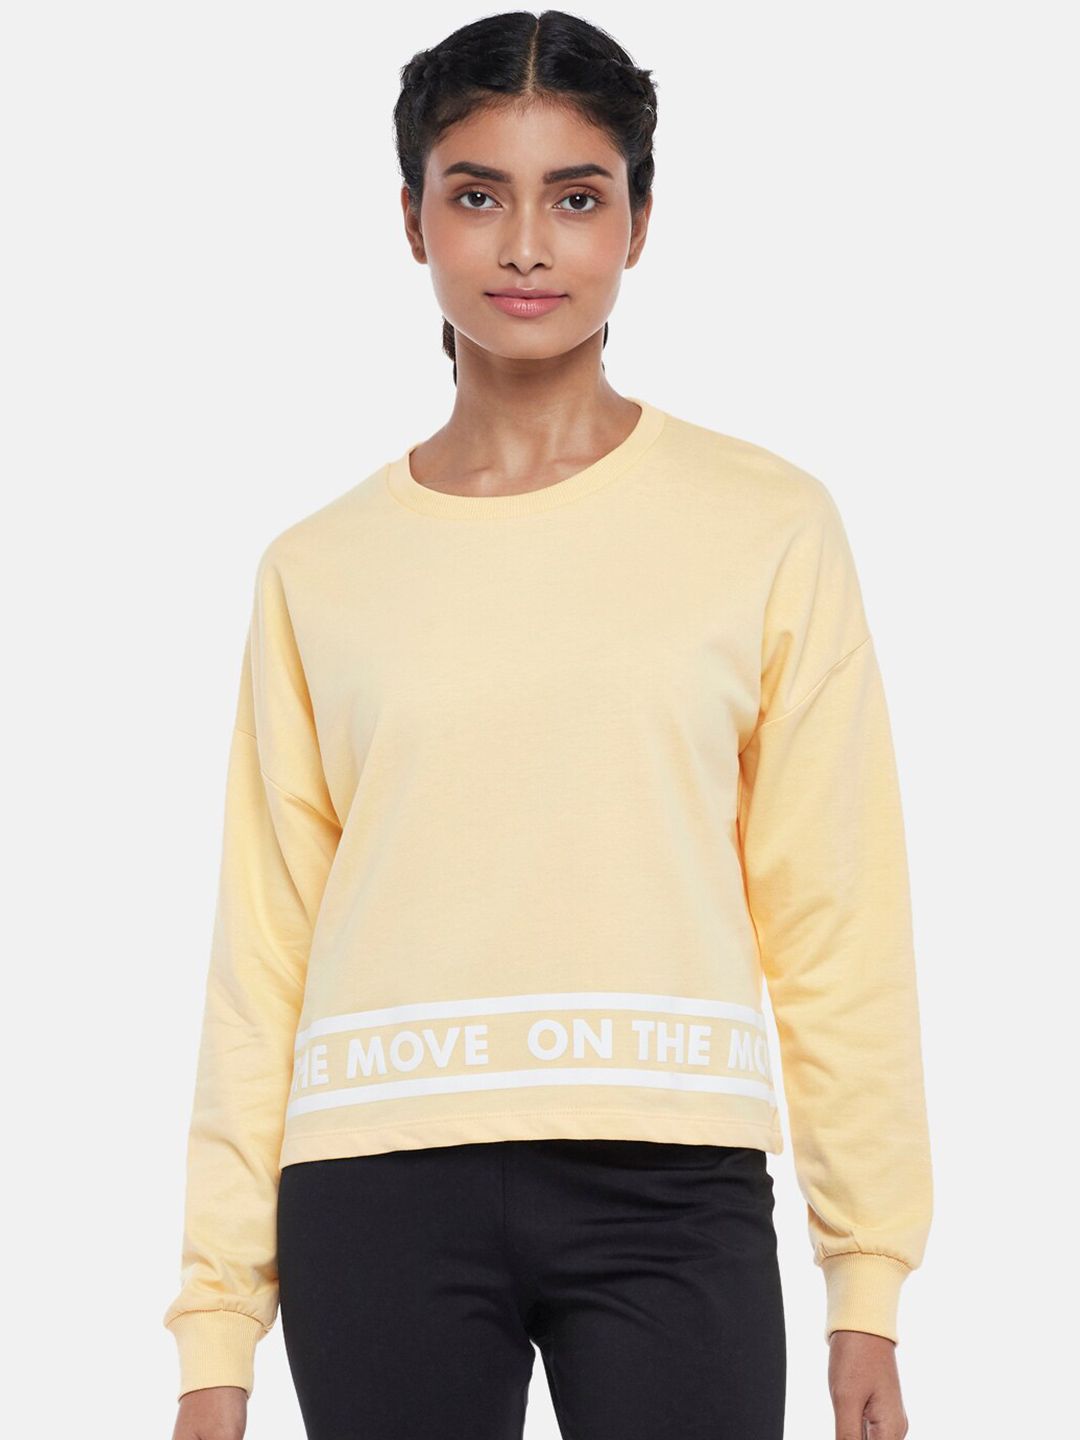 Ajile by Pantaloons Women Yellow Printed Sweatshirt Price in India